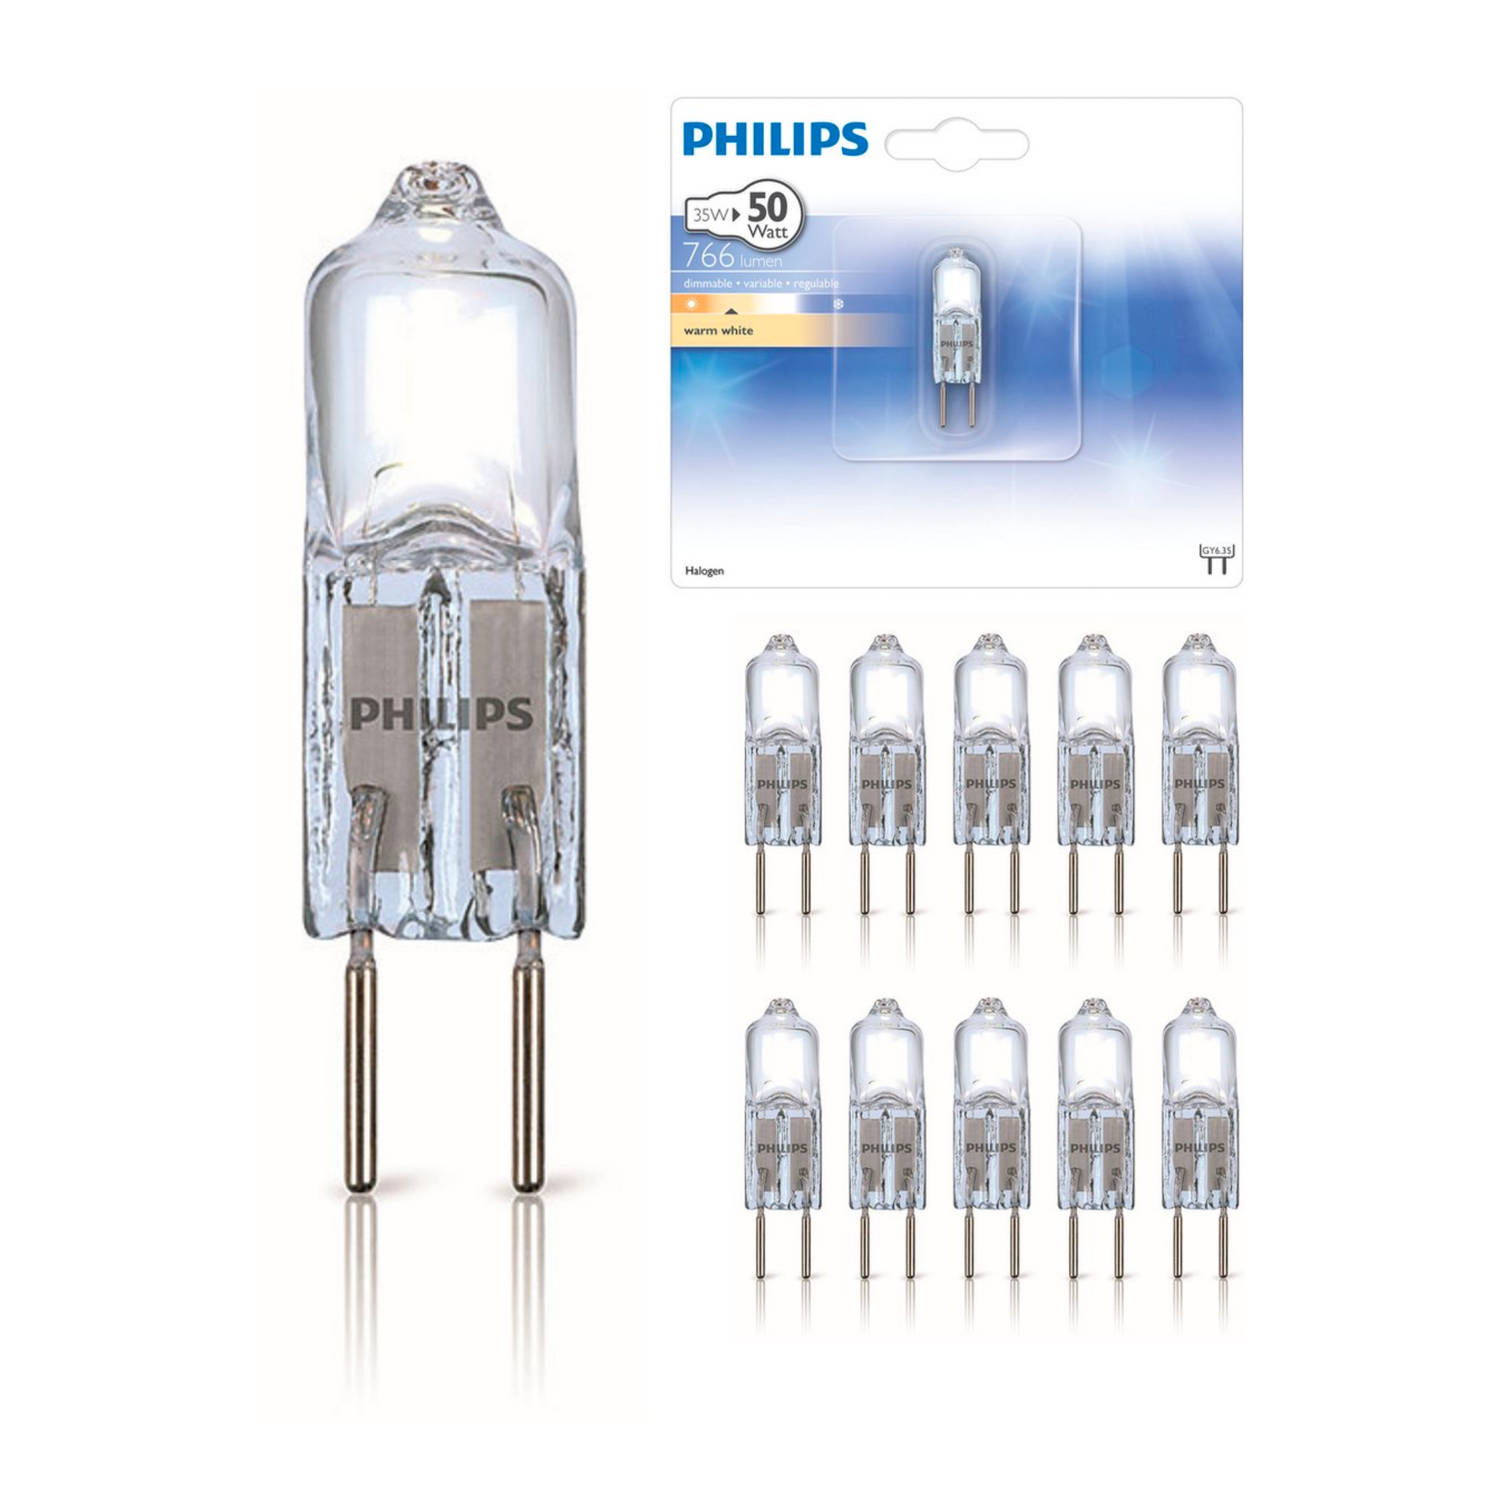 Philips Halogeen Lampen Capsule Gy6.35 - Dimbaar - Warm Wit - 35w/50w - 12v - 10 X Halogeenlamp Gy6.35